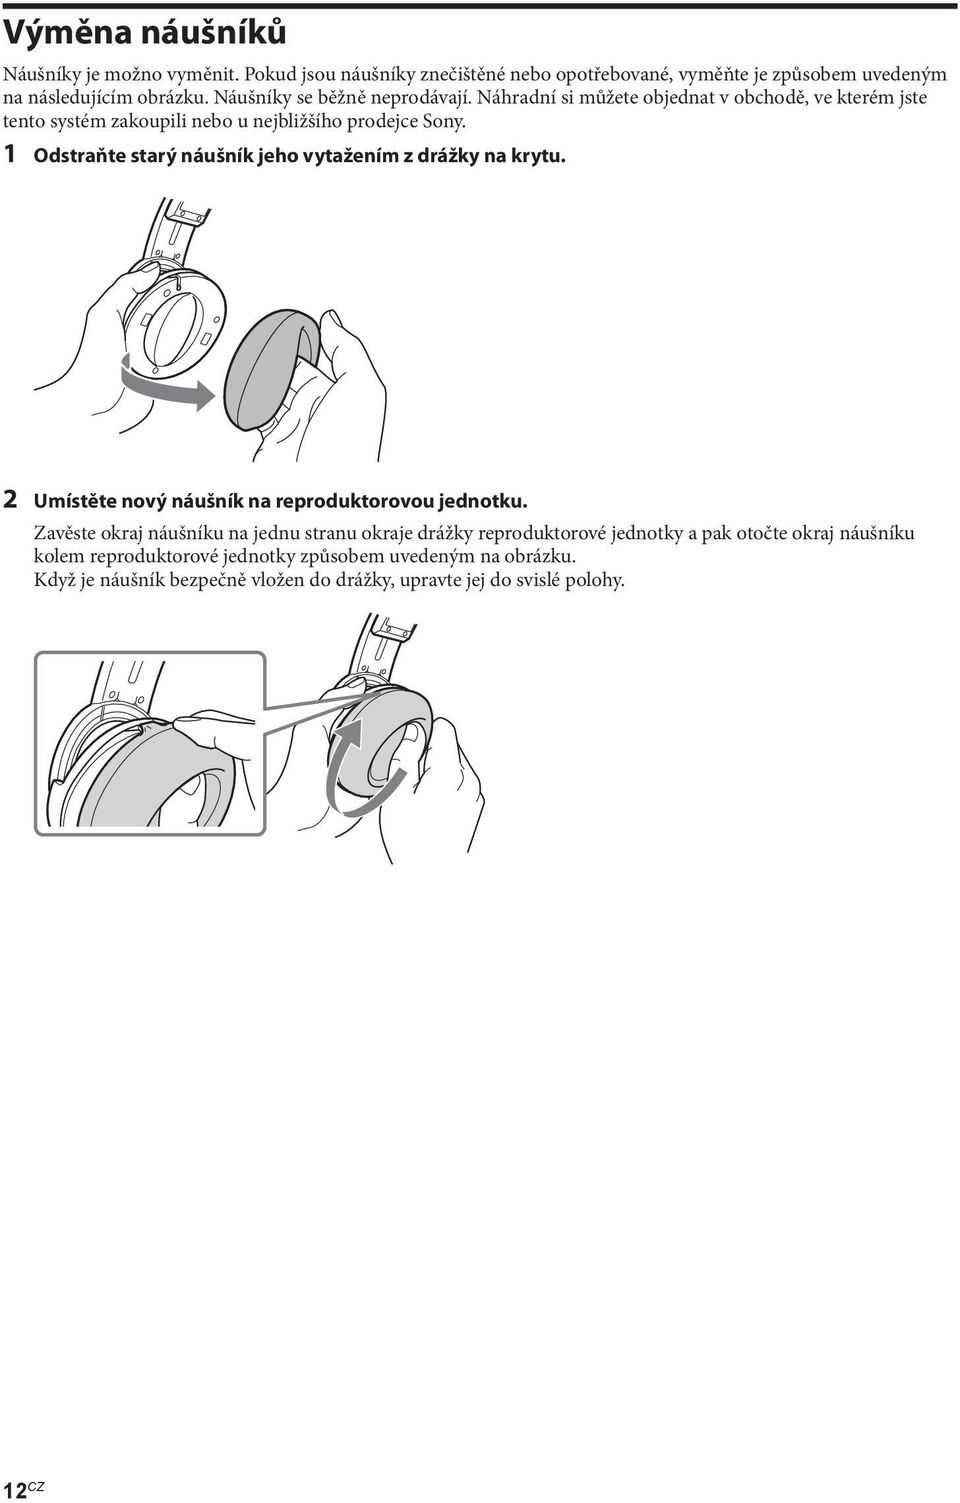 Bezdrátový sluchátkový stereo systém - PDF Stažení zdarma